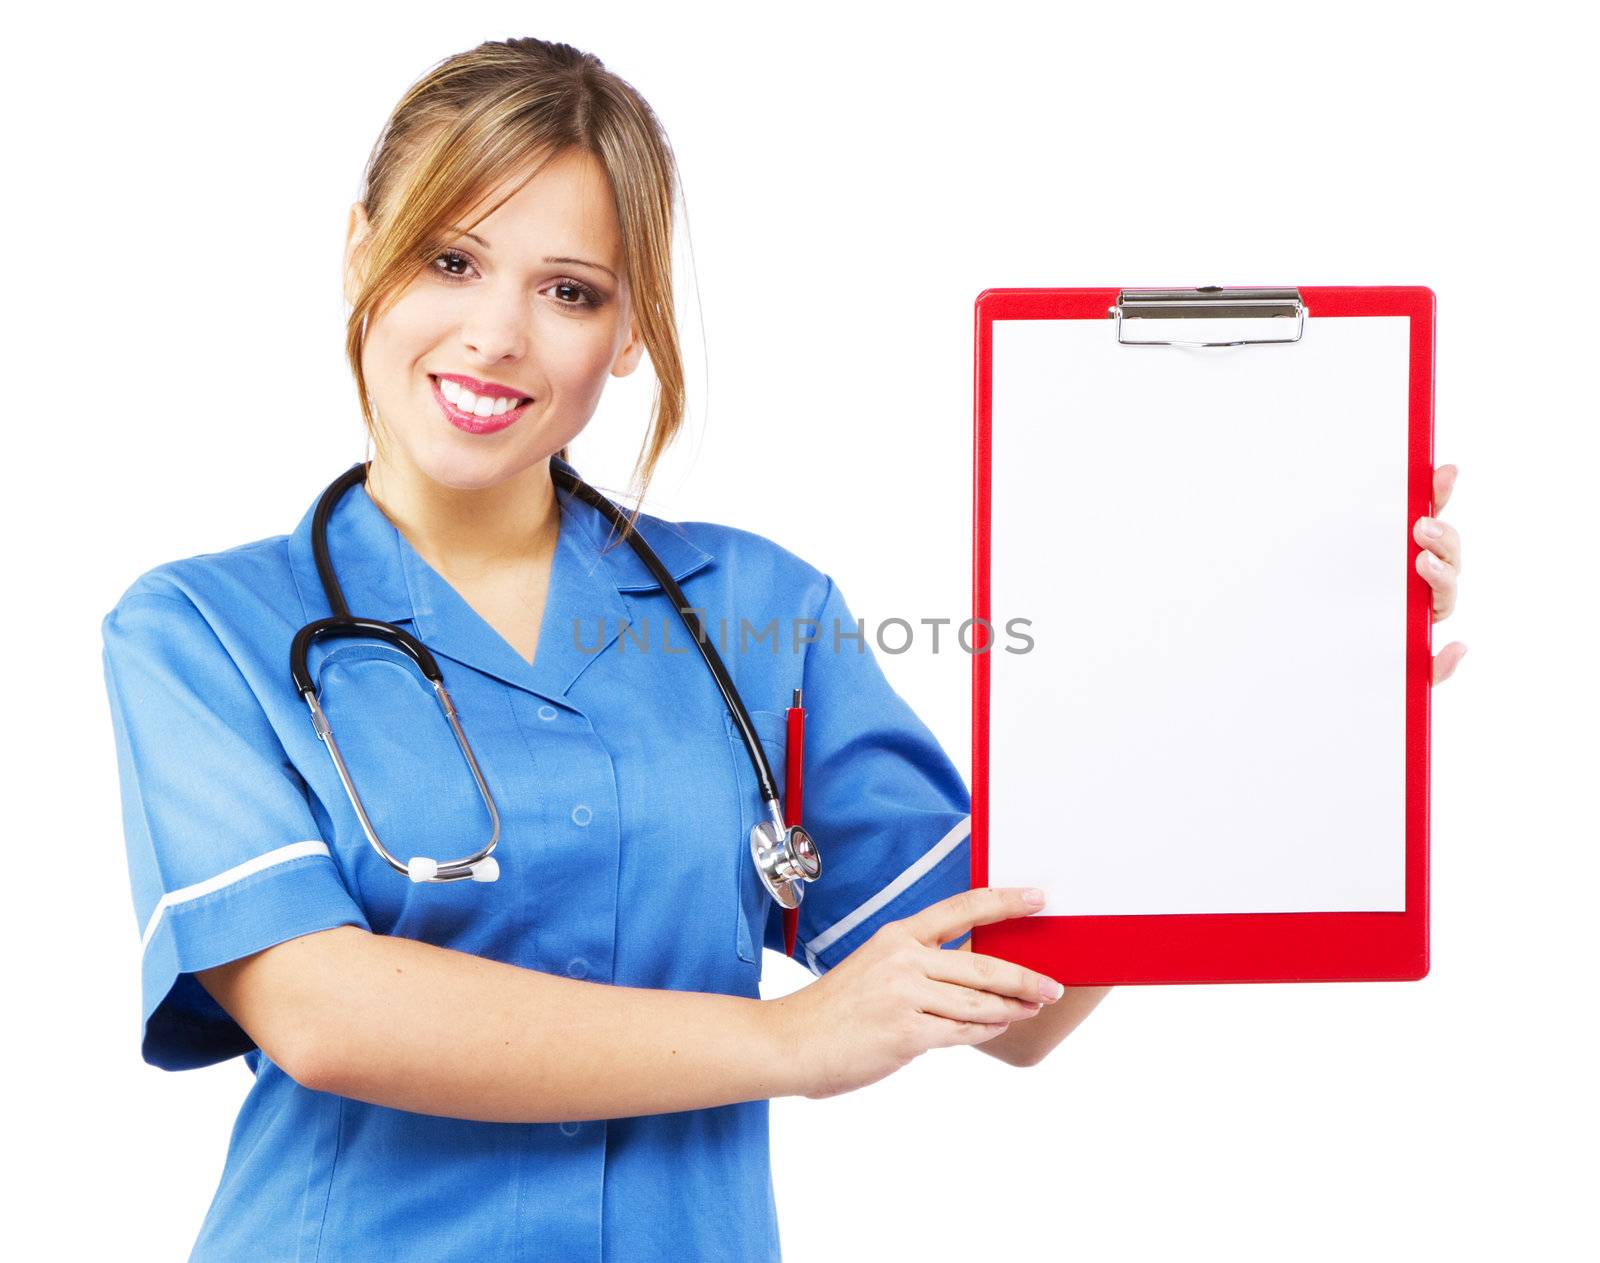 Friendly nurse on white background by Gdolgikh